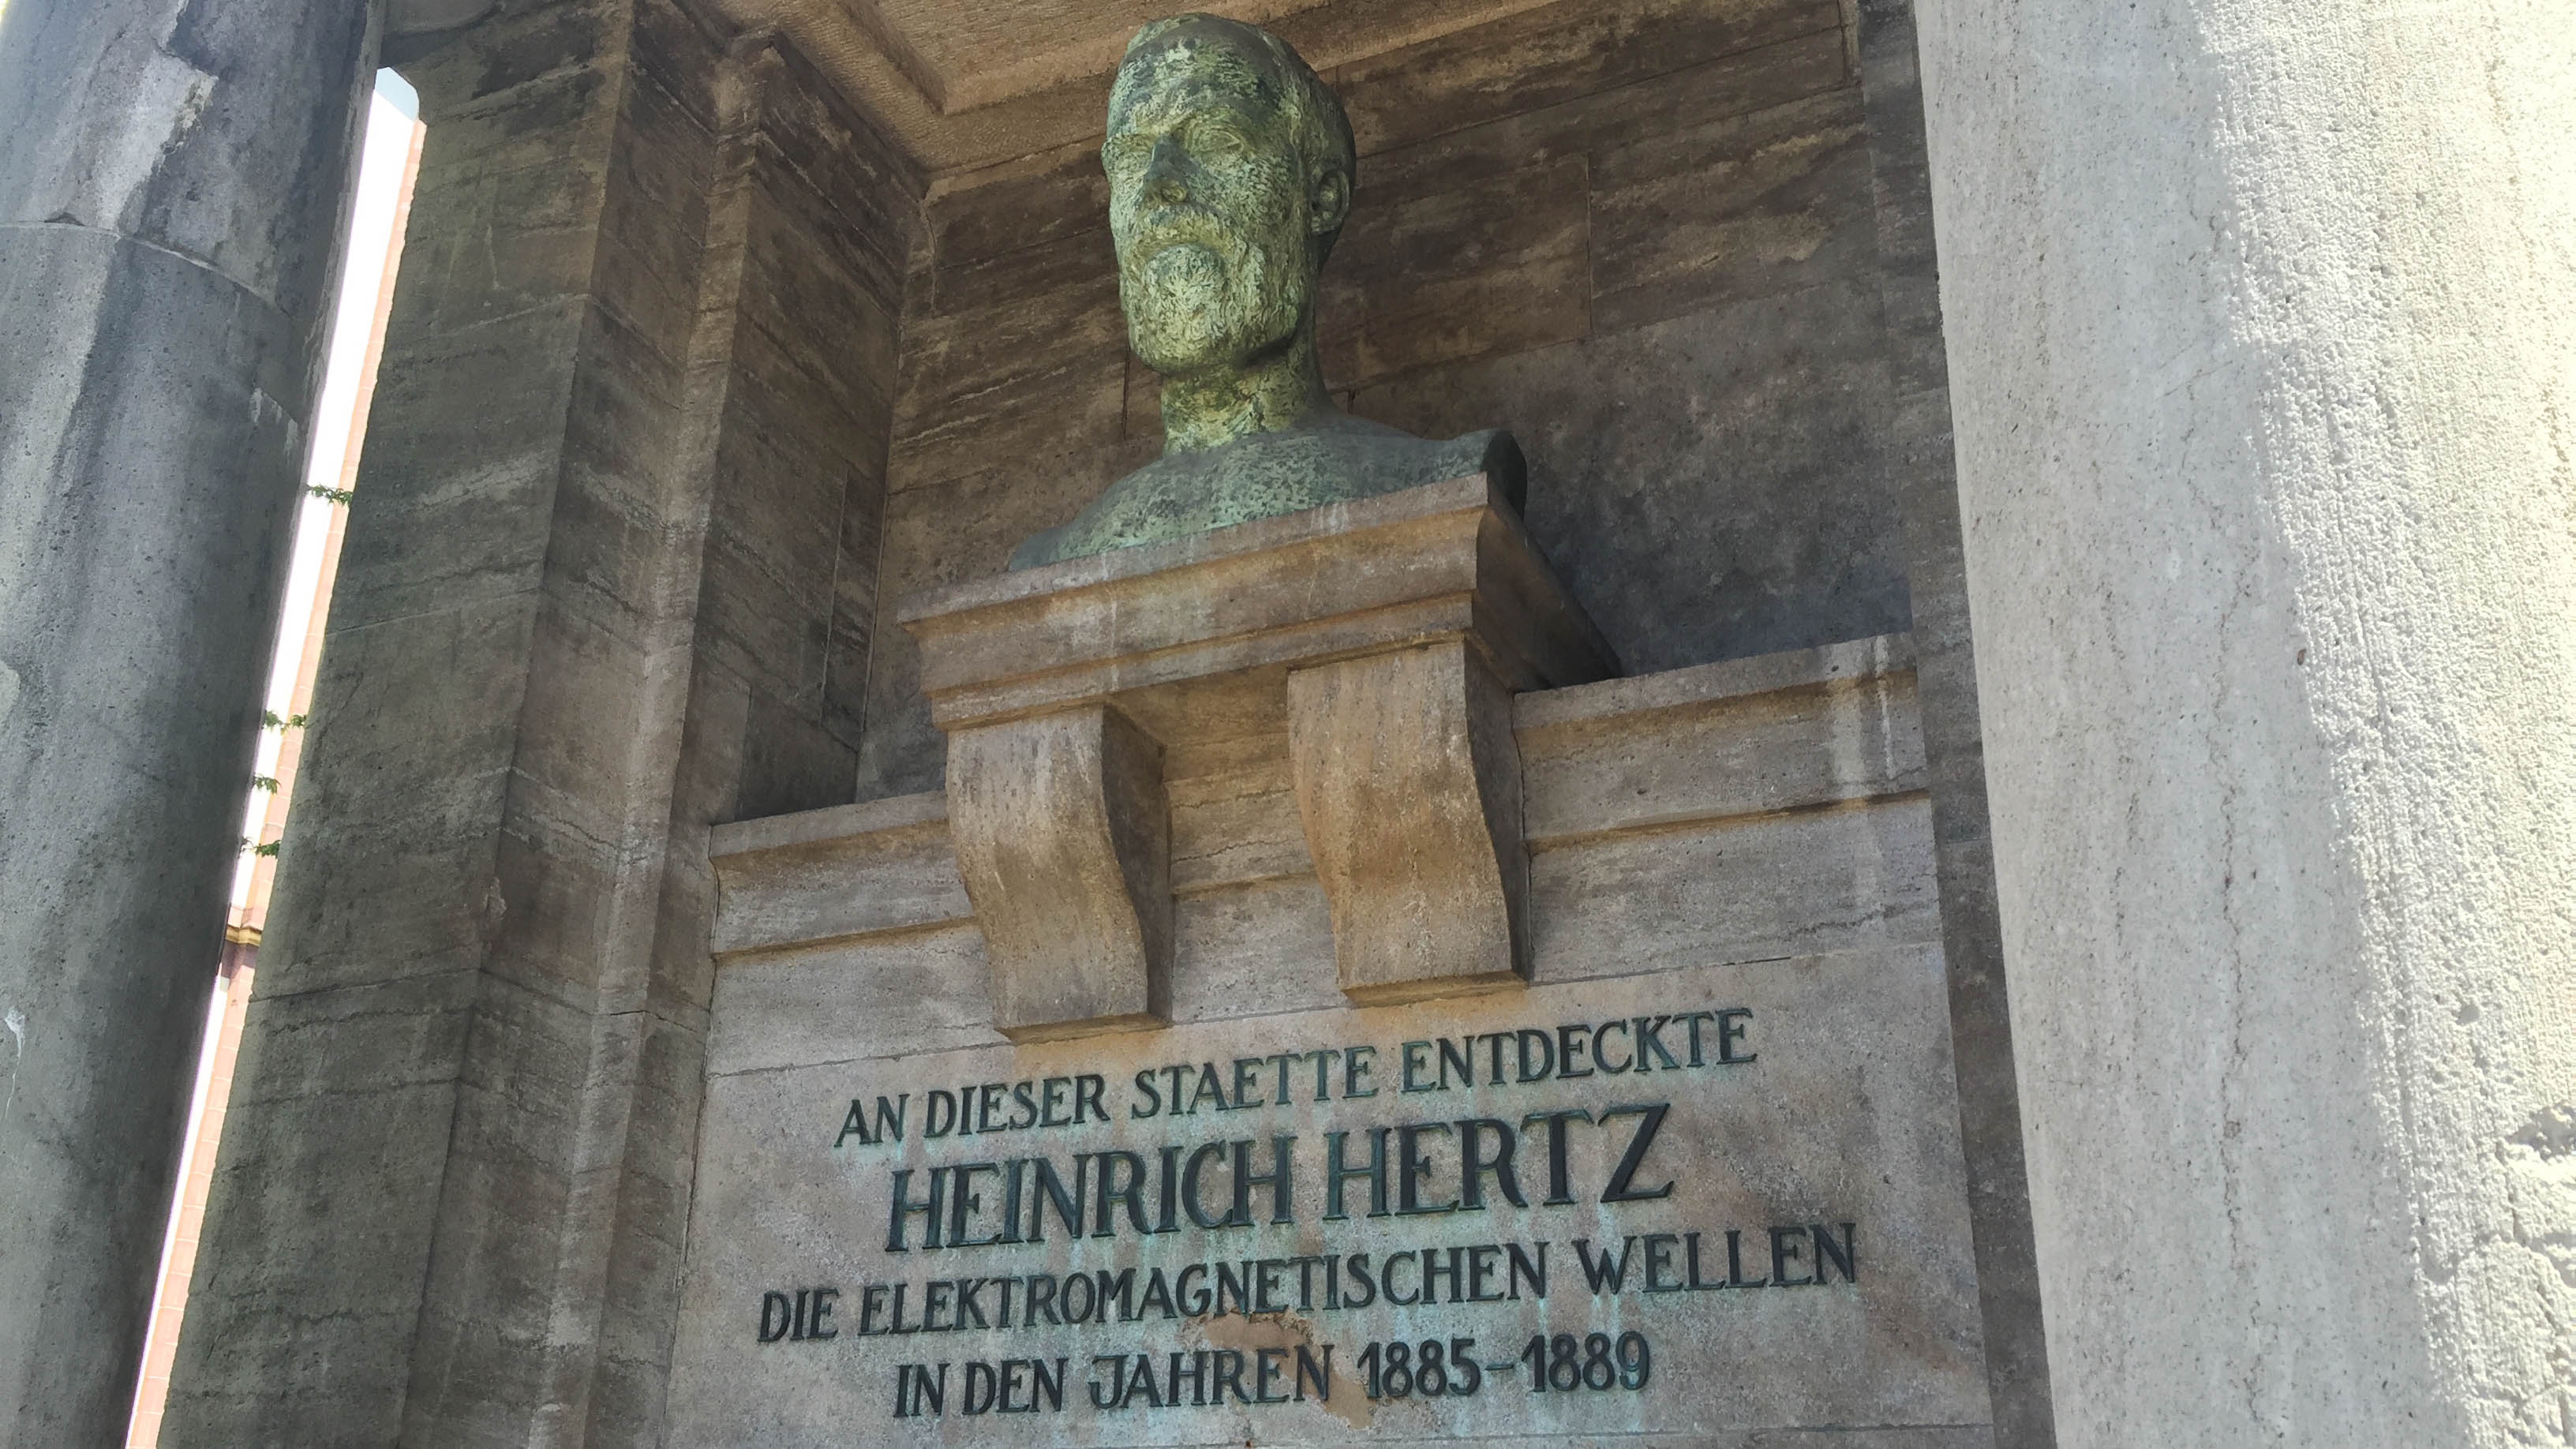 The Hertz memorial in Karlsruhe